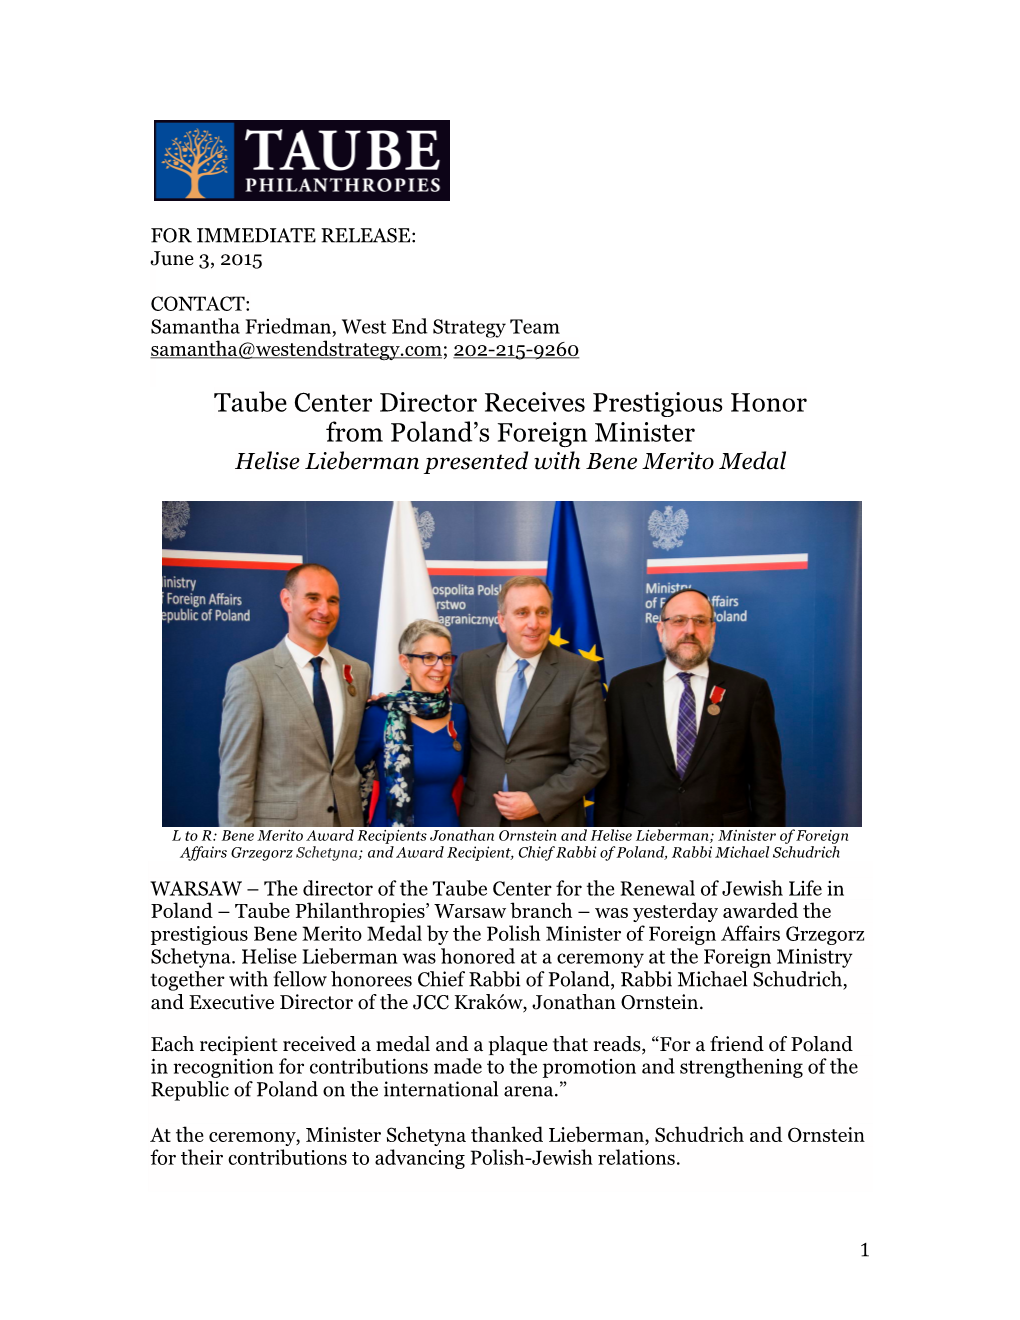 Taube Center Director Receives Prestigious Honor from Poland's